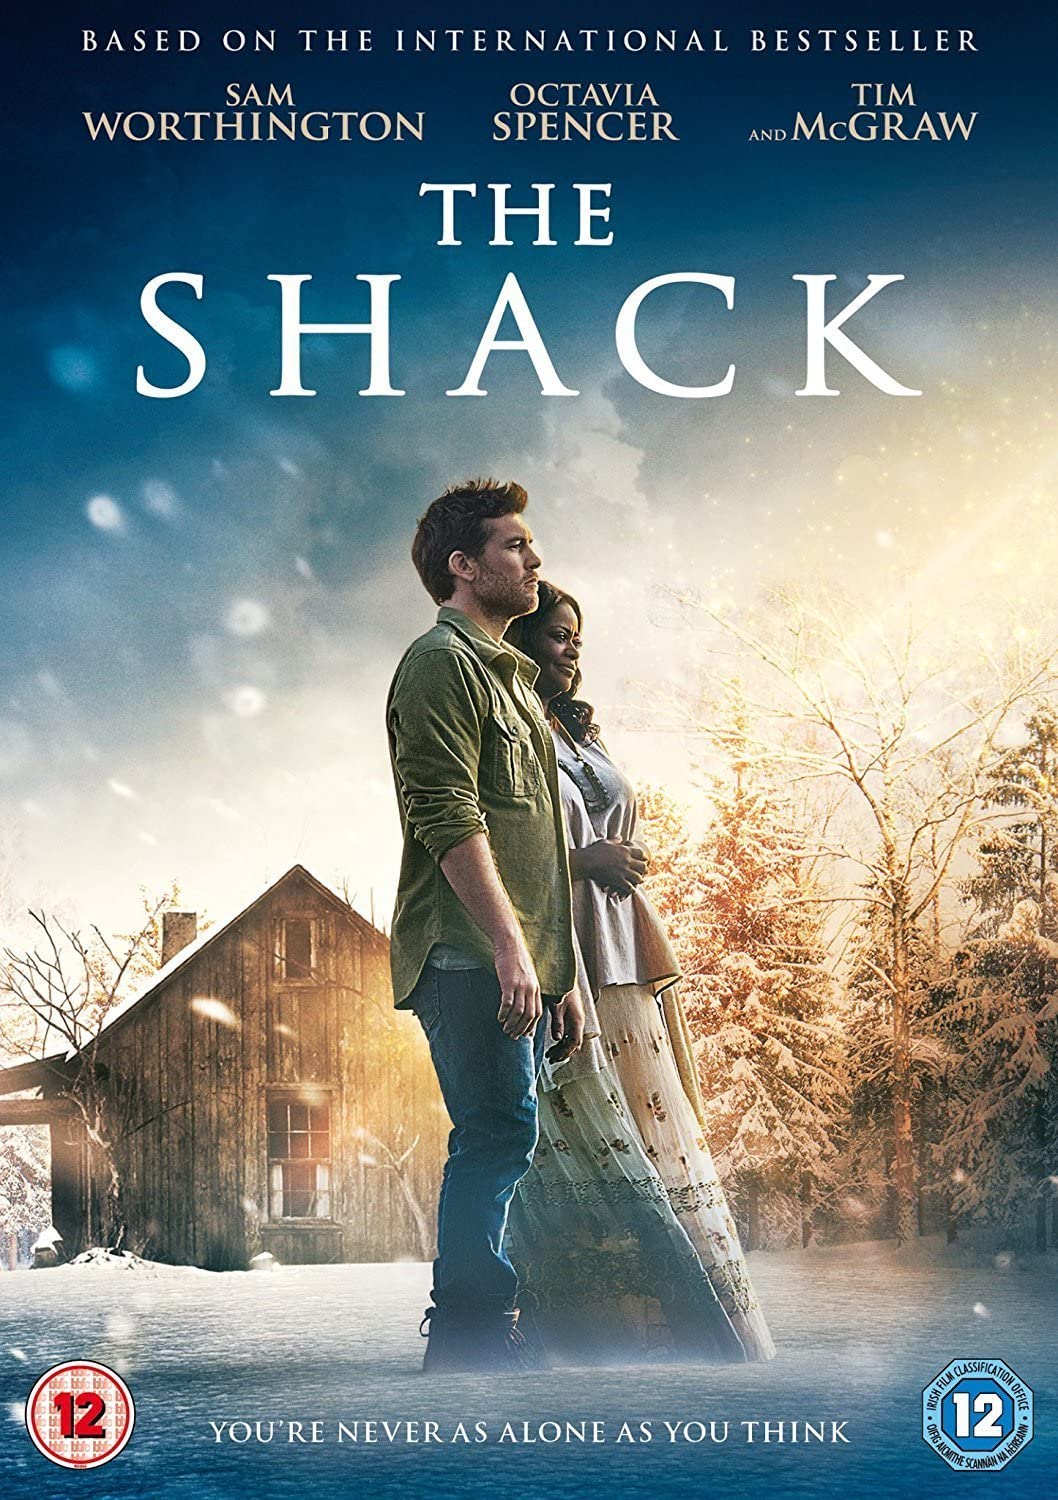 The Shack - Drama/Fantasy [DVD]